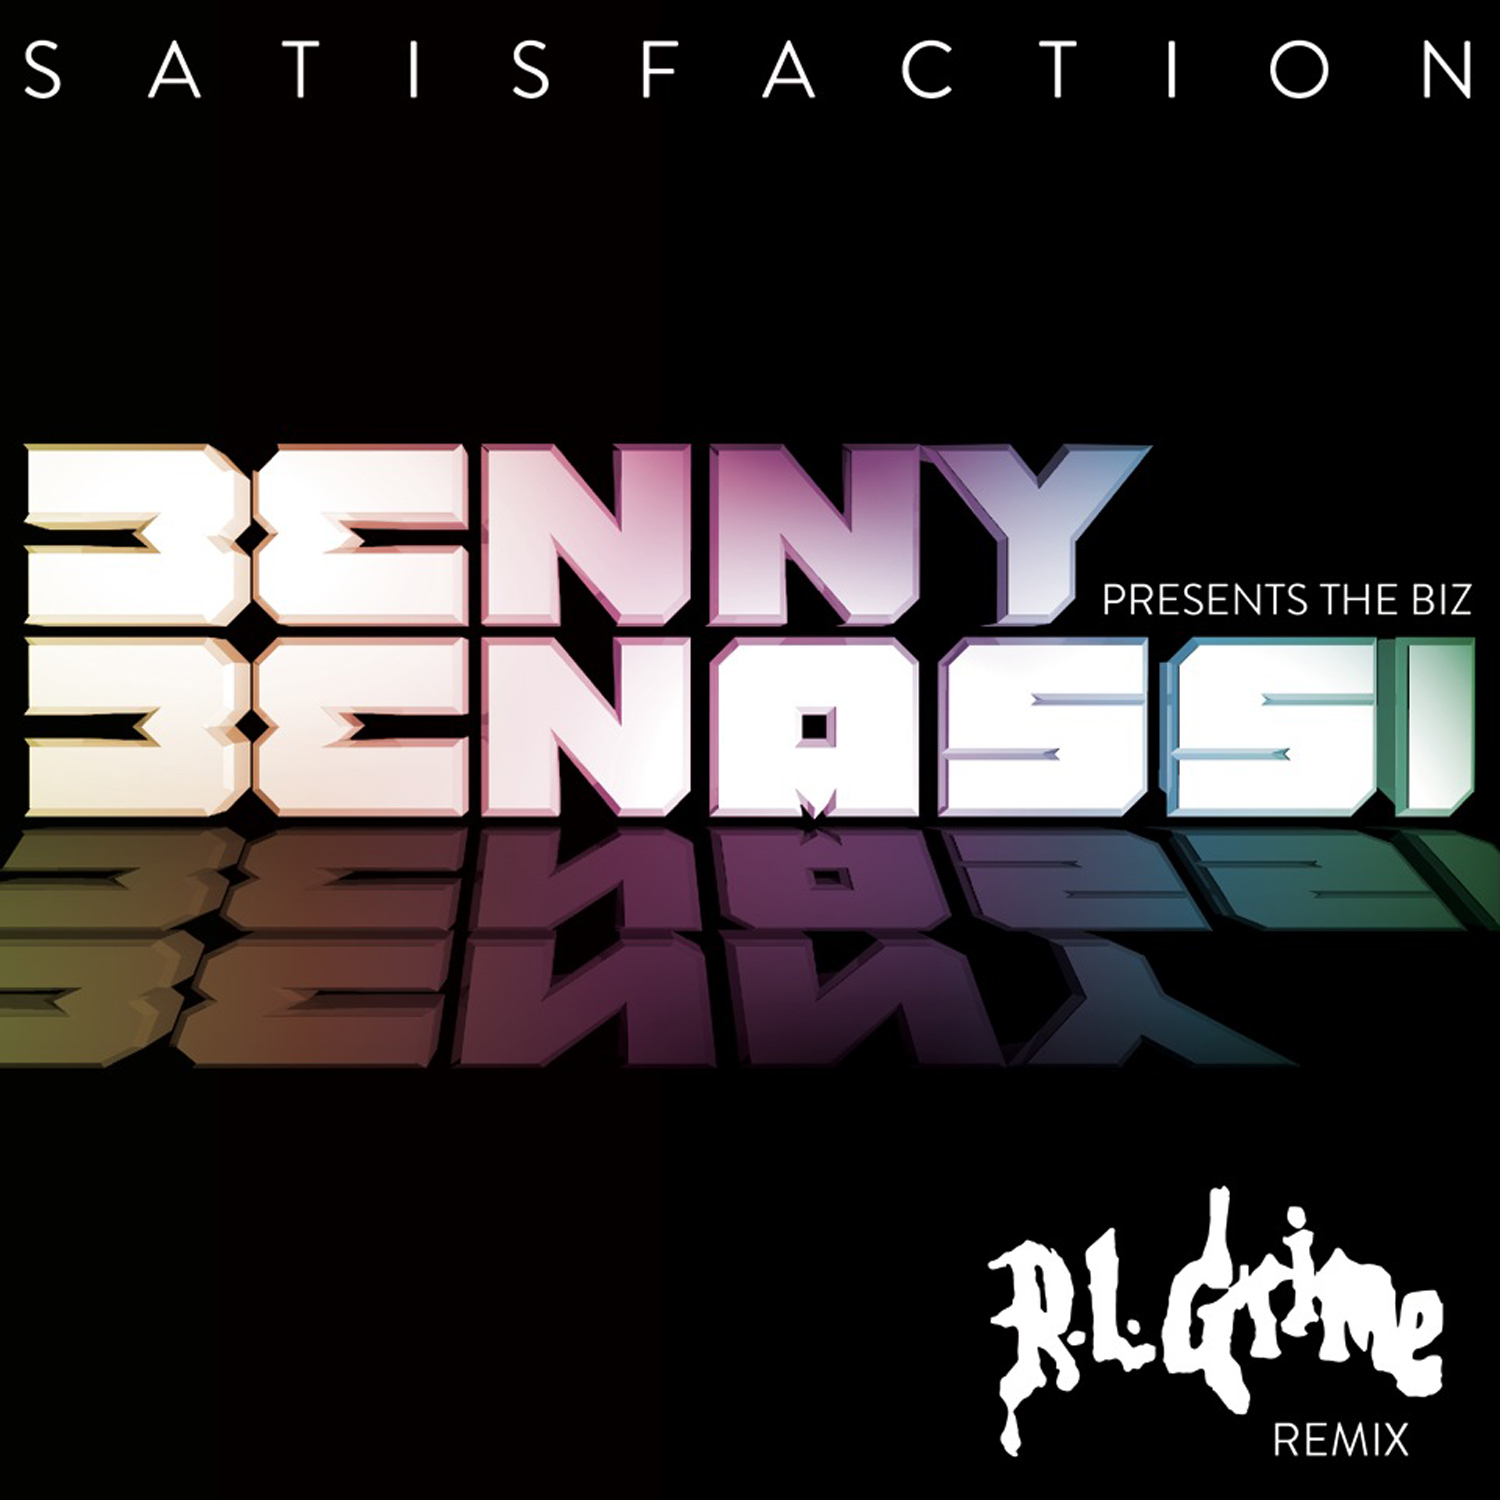 Luchdaich sìos Satisfaction (RL Grime Remix) - Benny Benassi (Preview)